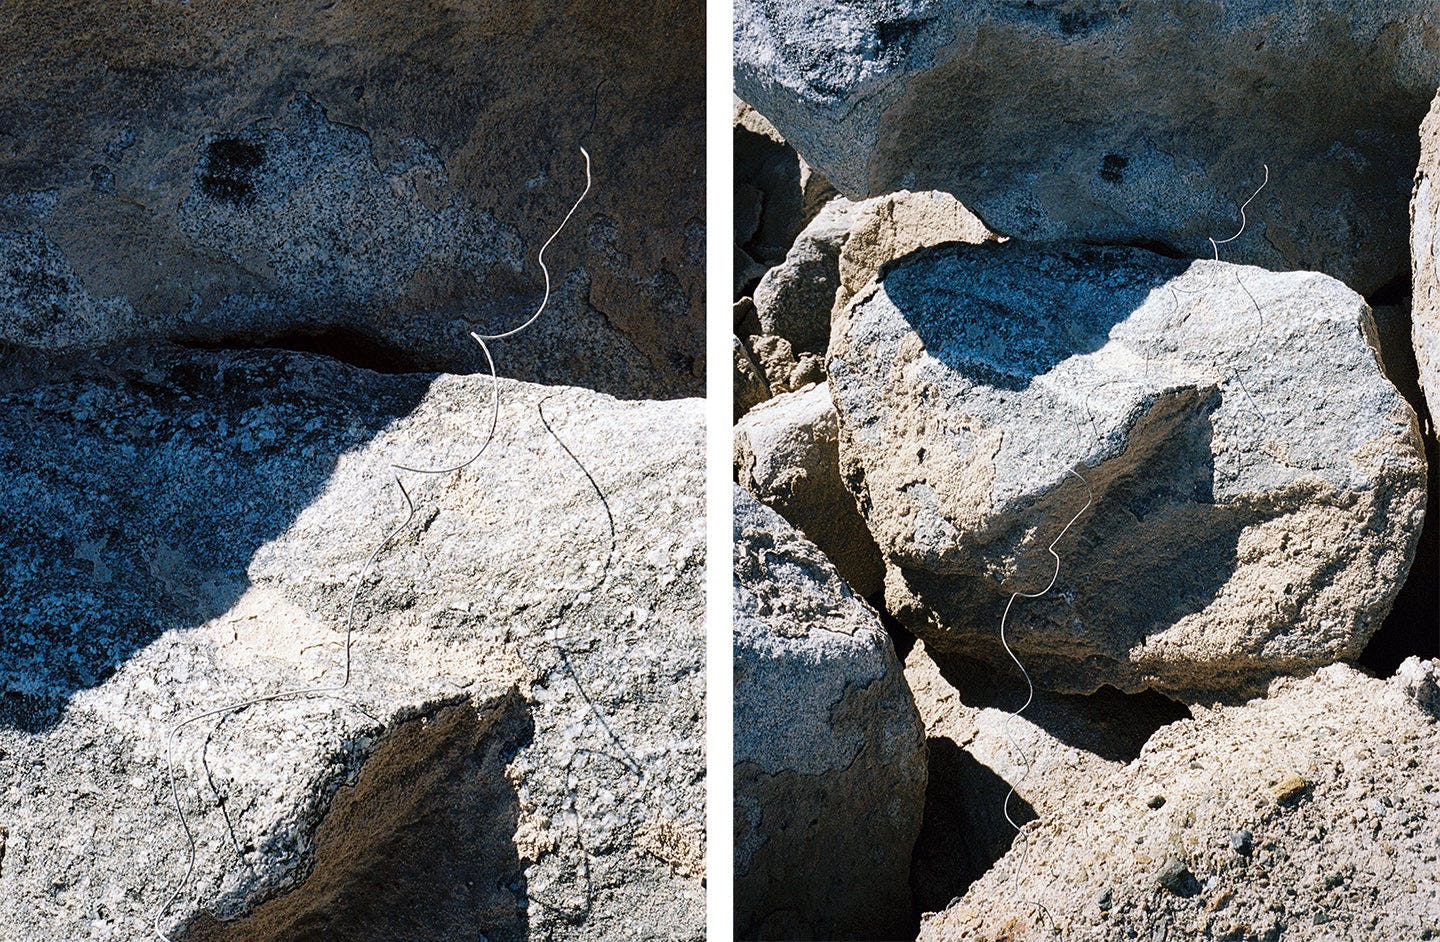 Ryan James MacFarland - Dilemma (Salton Sea) - Photography